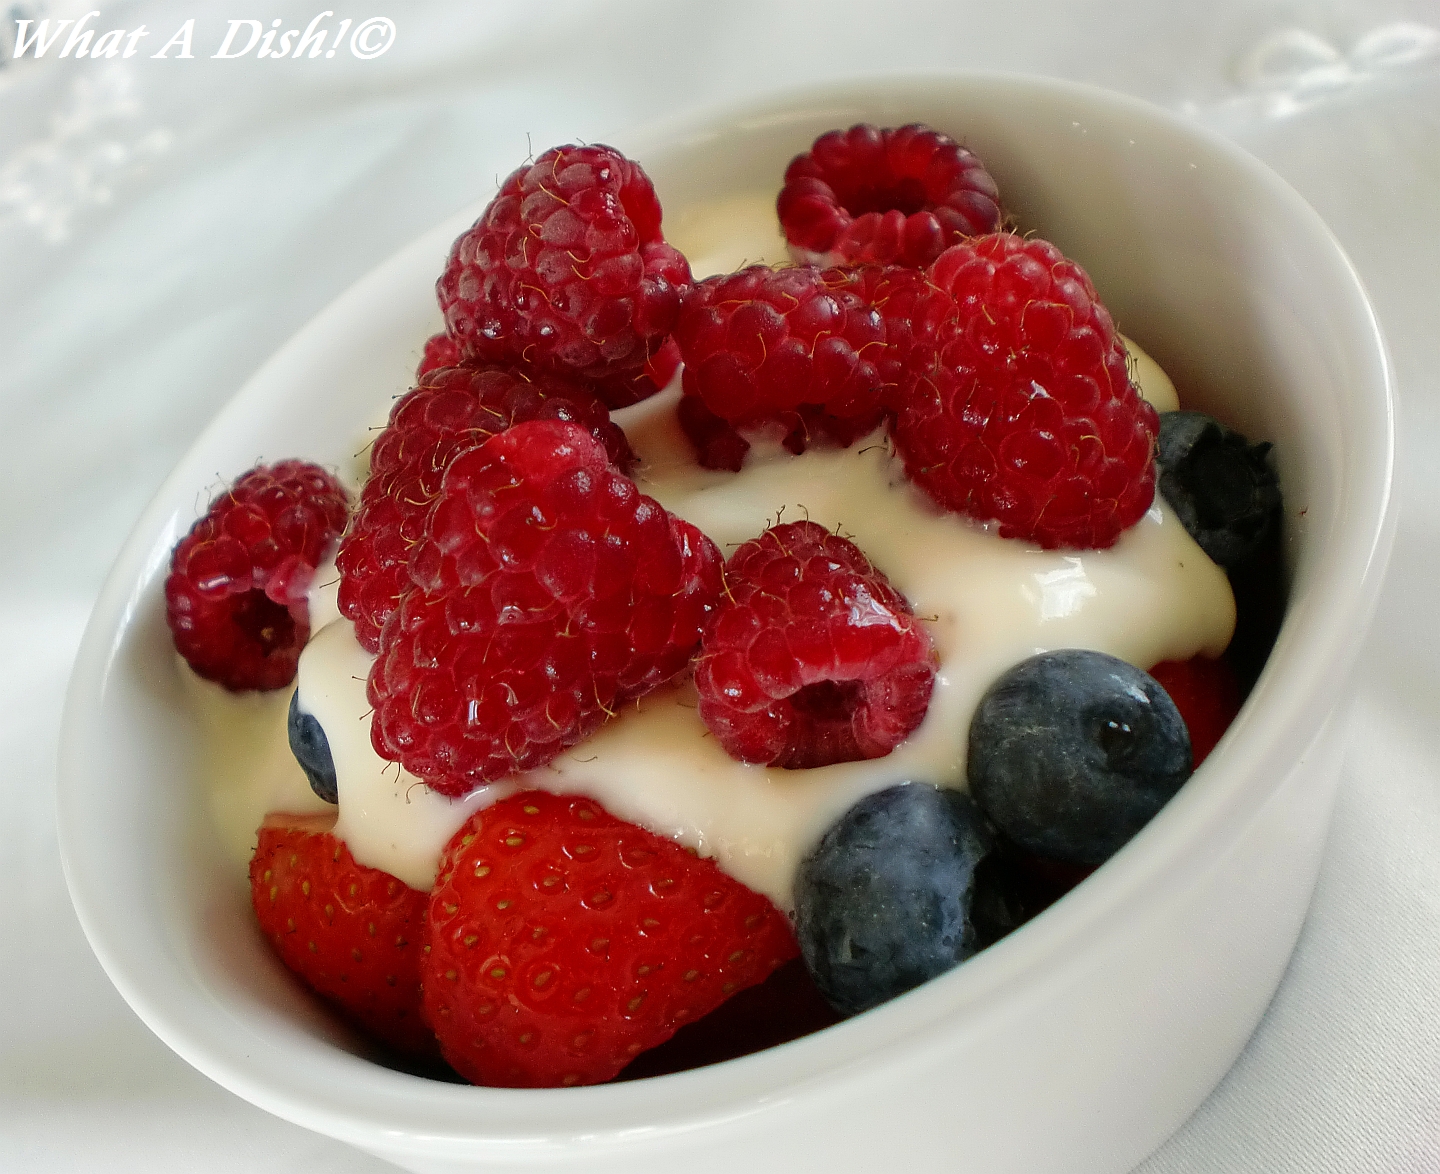 What A Dish!: Berries & Yogurt